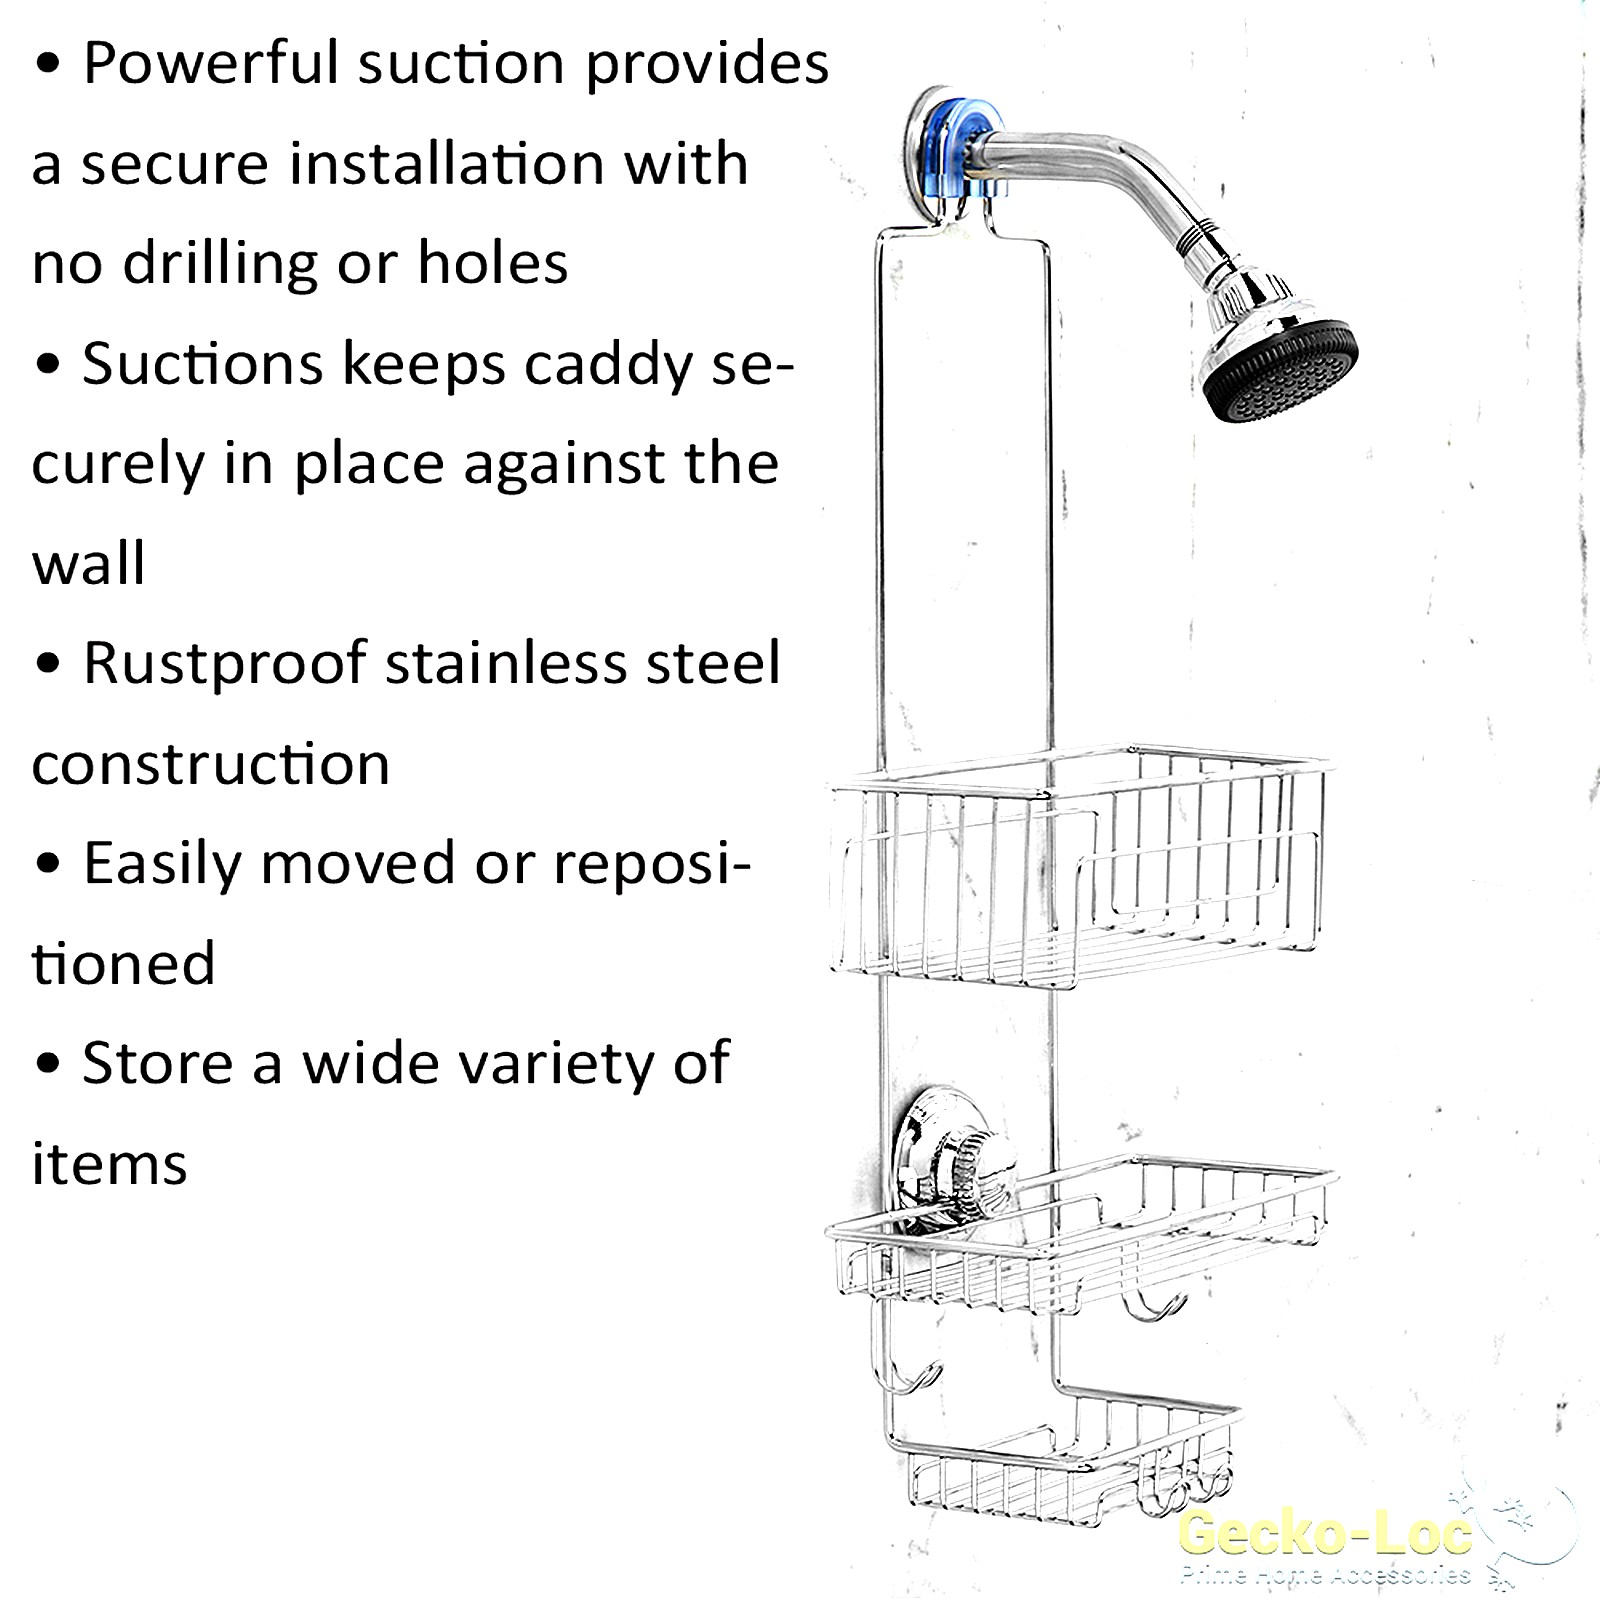 Gecko-Loc Extra Long Wide Adjustable Length Over The Showerhead Hanging Shower Caddy Organizer - Stainless Steel Bathroom Caddies Storage Rack Shelf